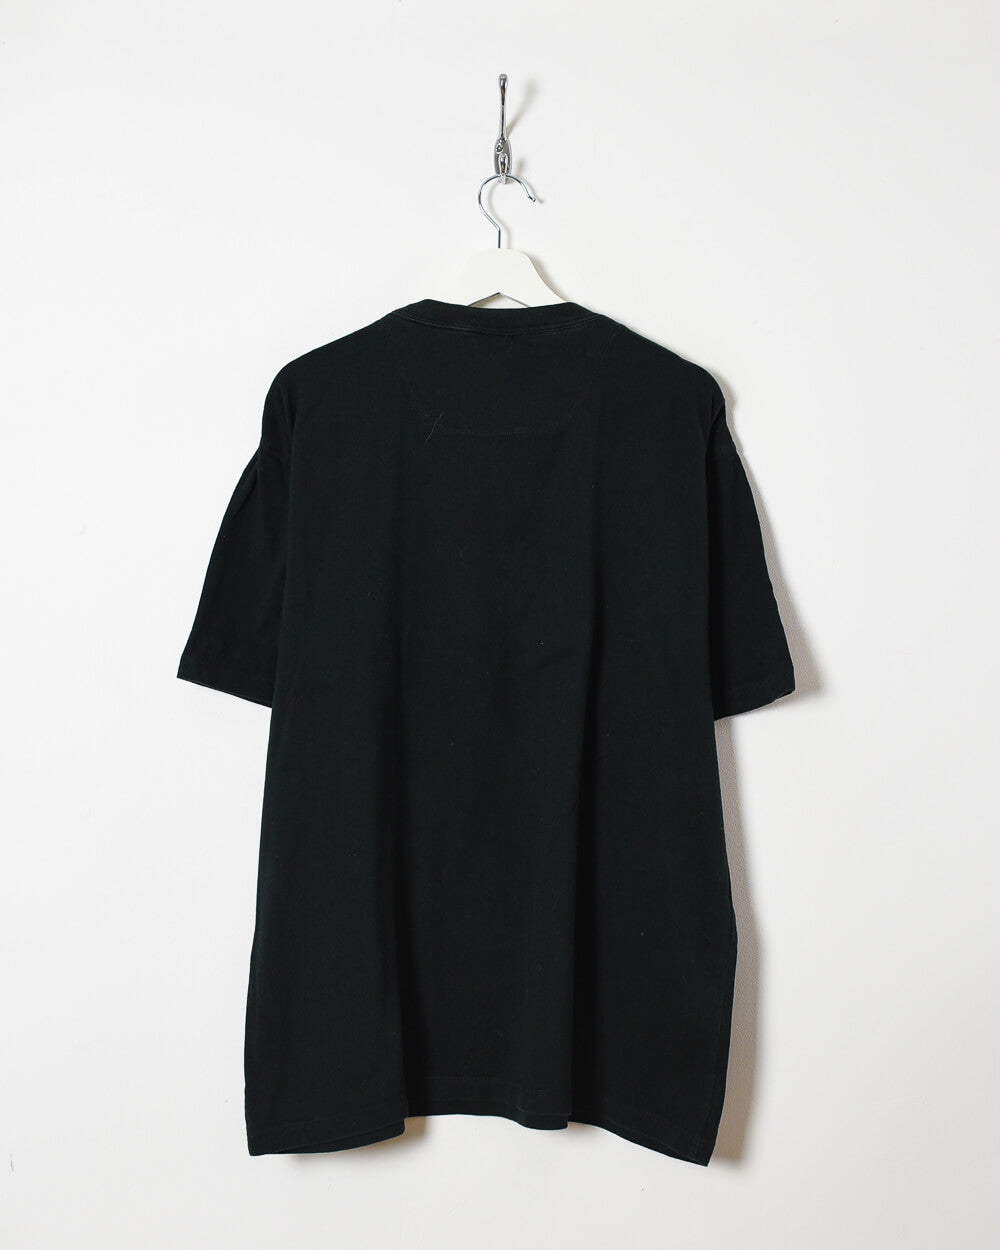 Black Adidas T-Shirt - X-Large